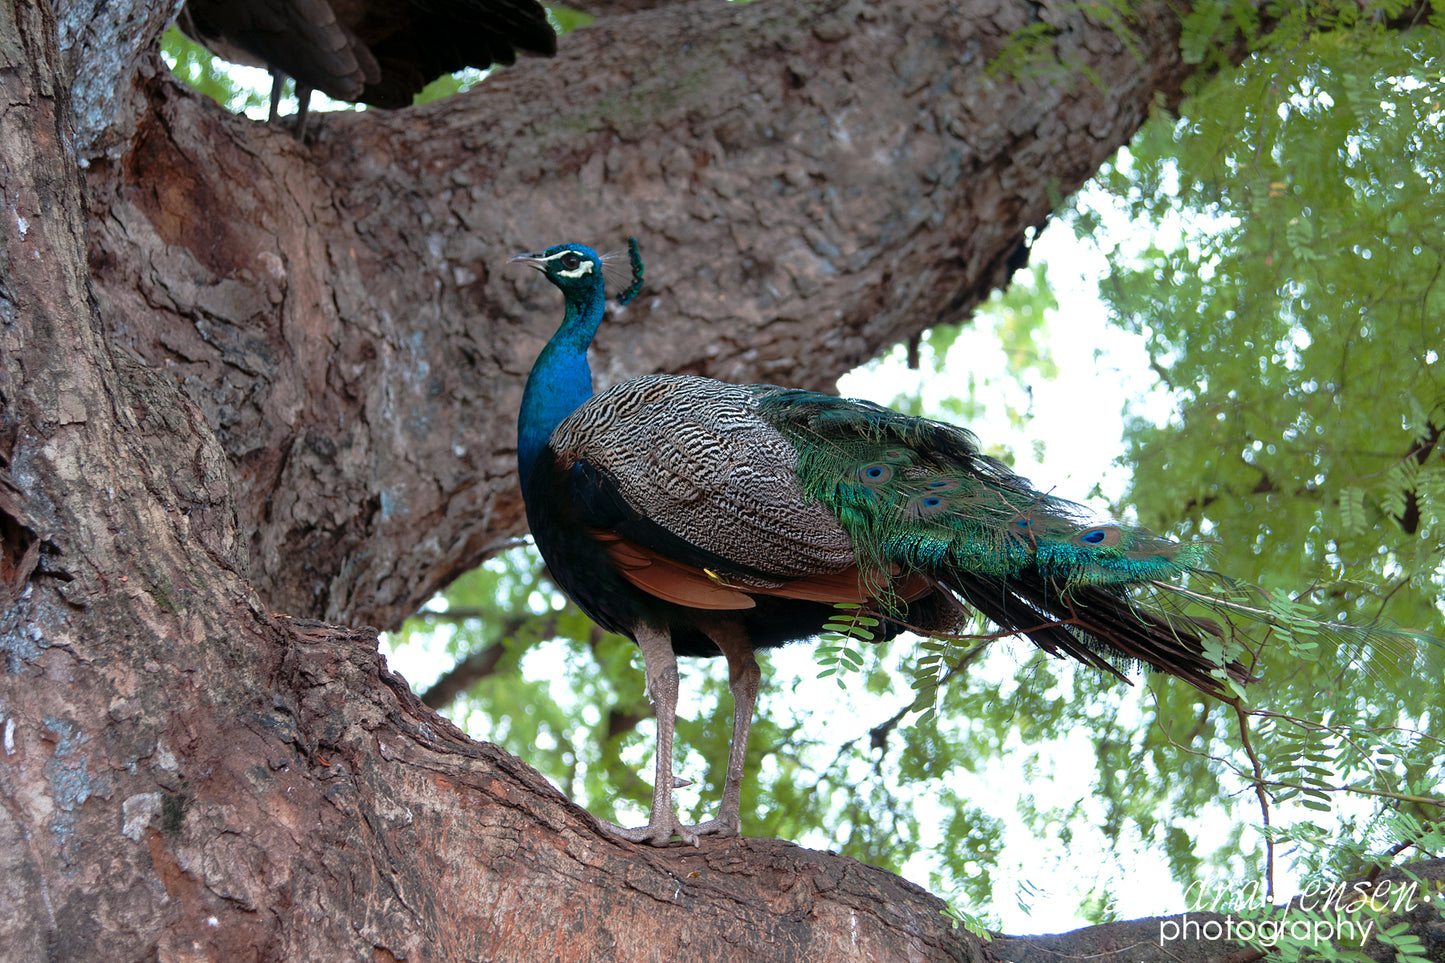 Print - Zanzibar, Tanzania - Changuu Island Peacock